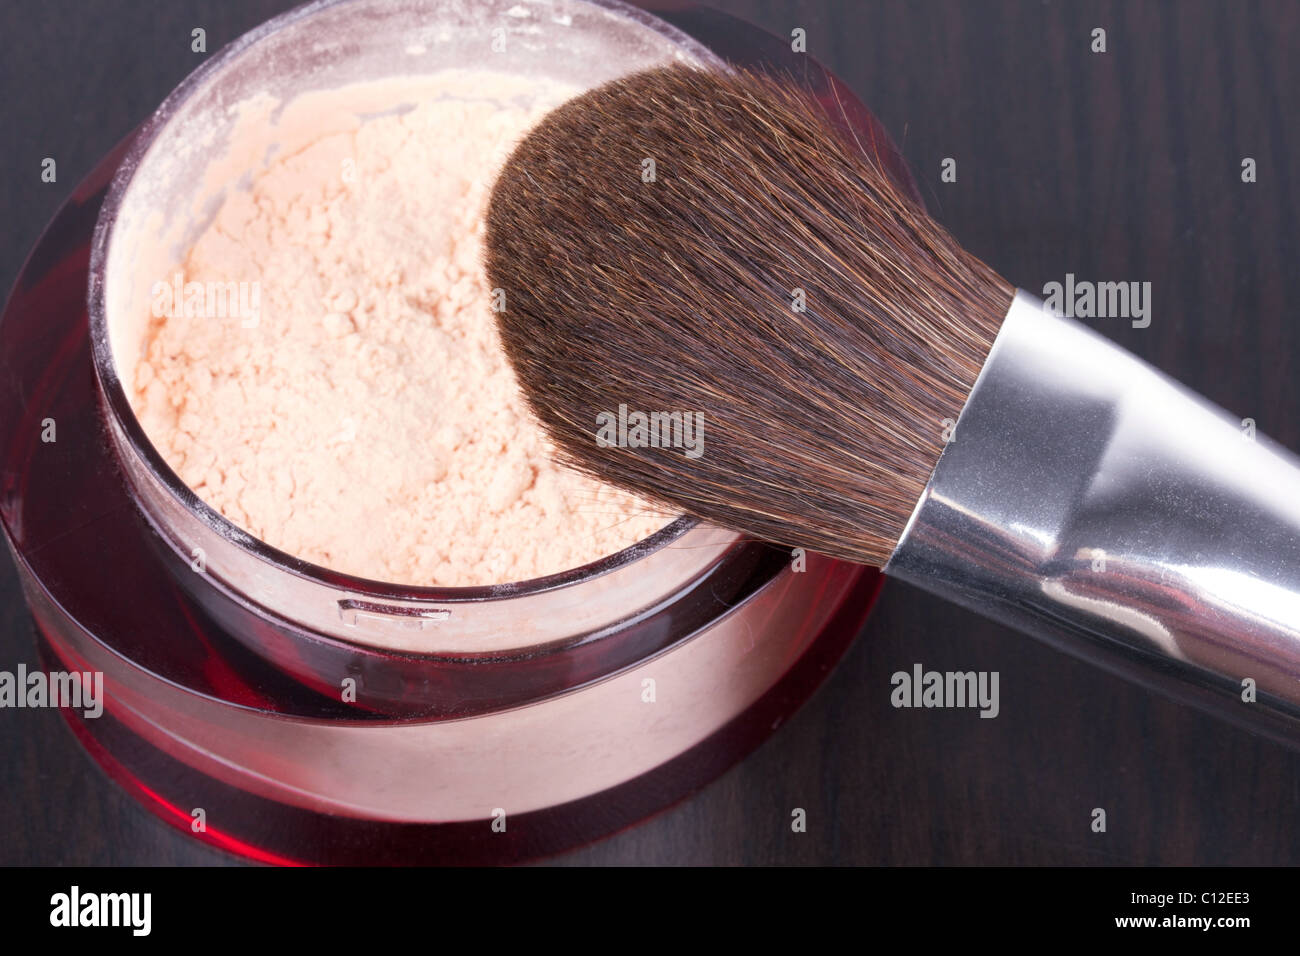 Professional make-up brush on box with powder, closeup Stock Photo